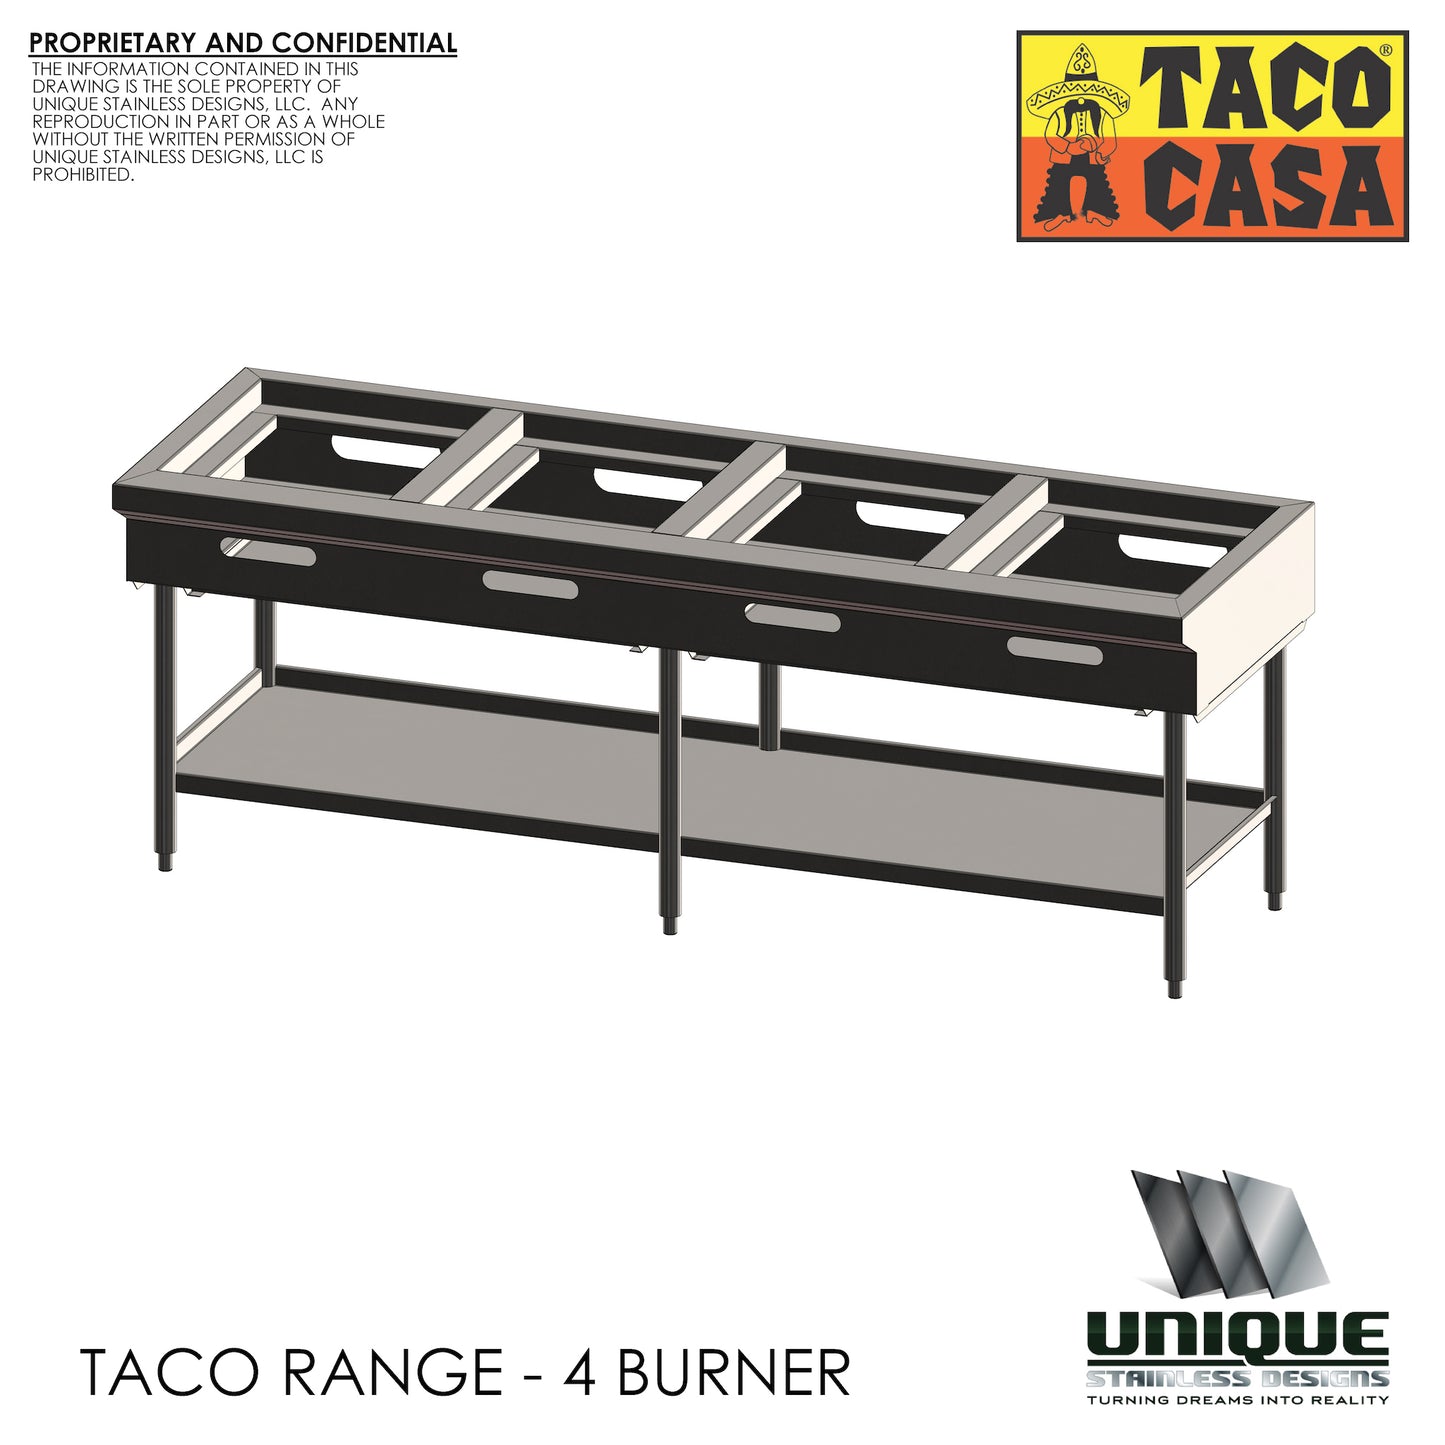 Taco Range - 4 Burner